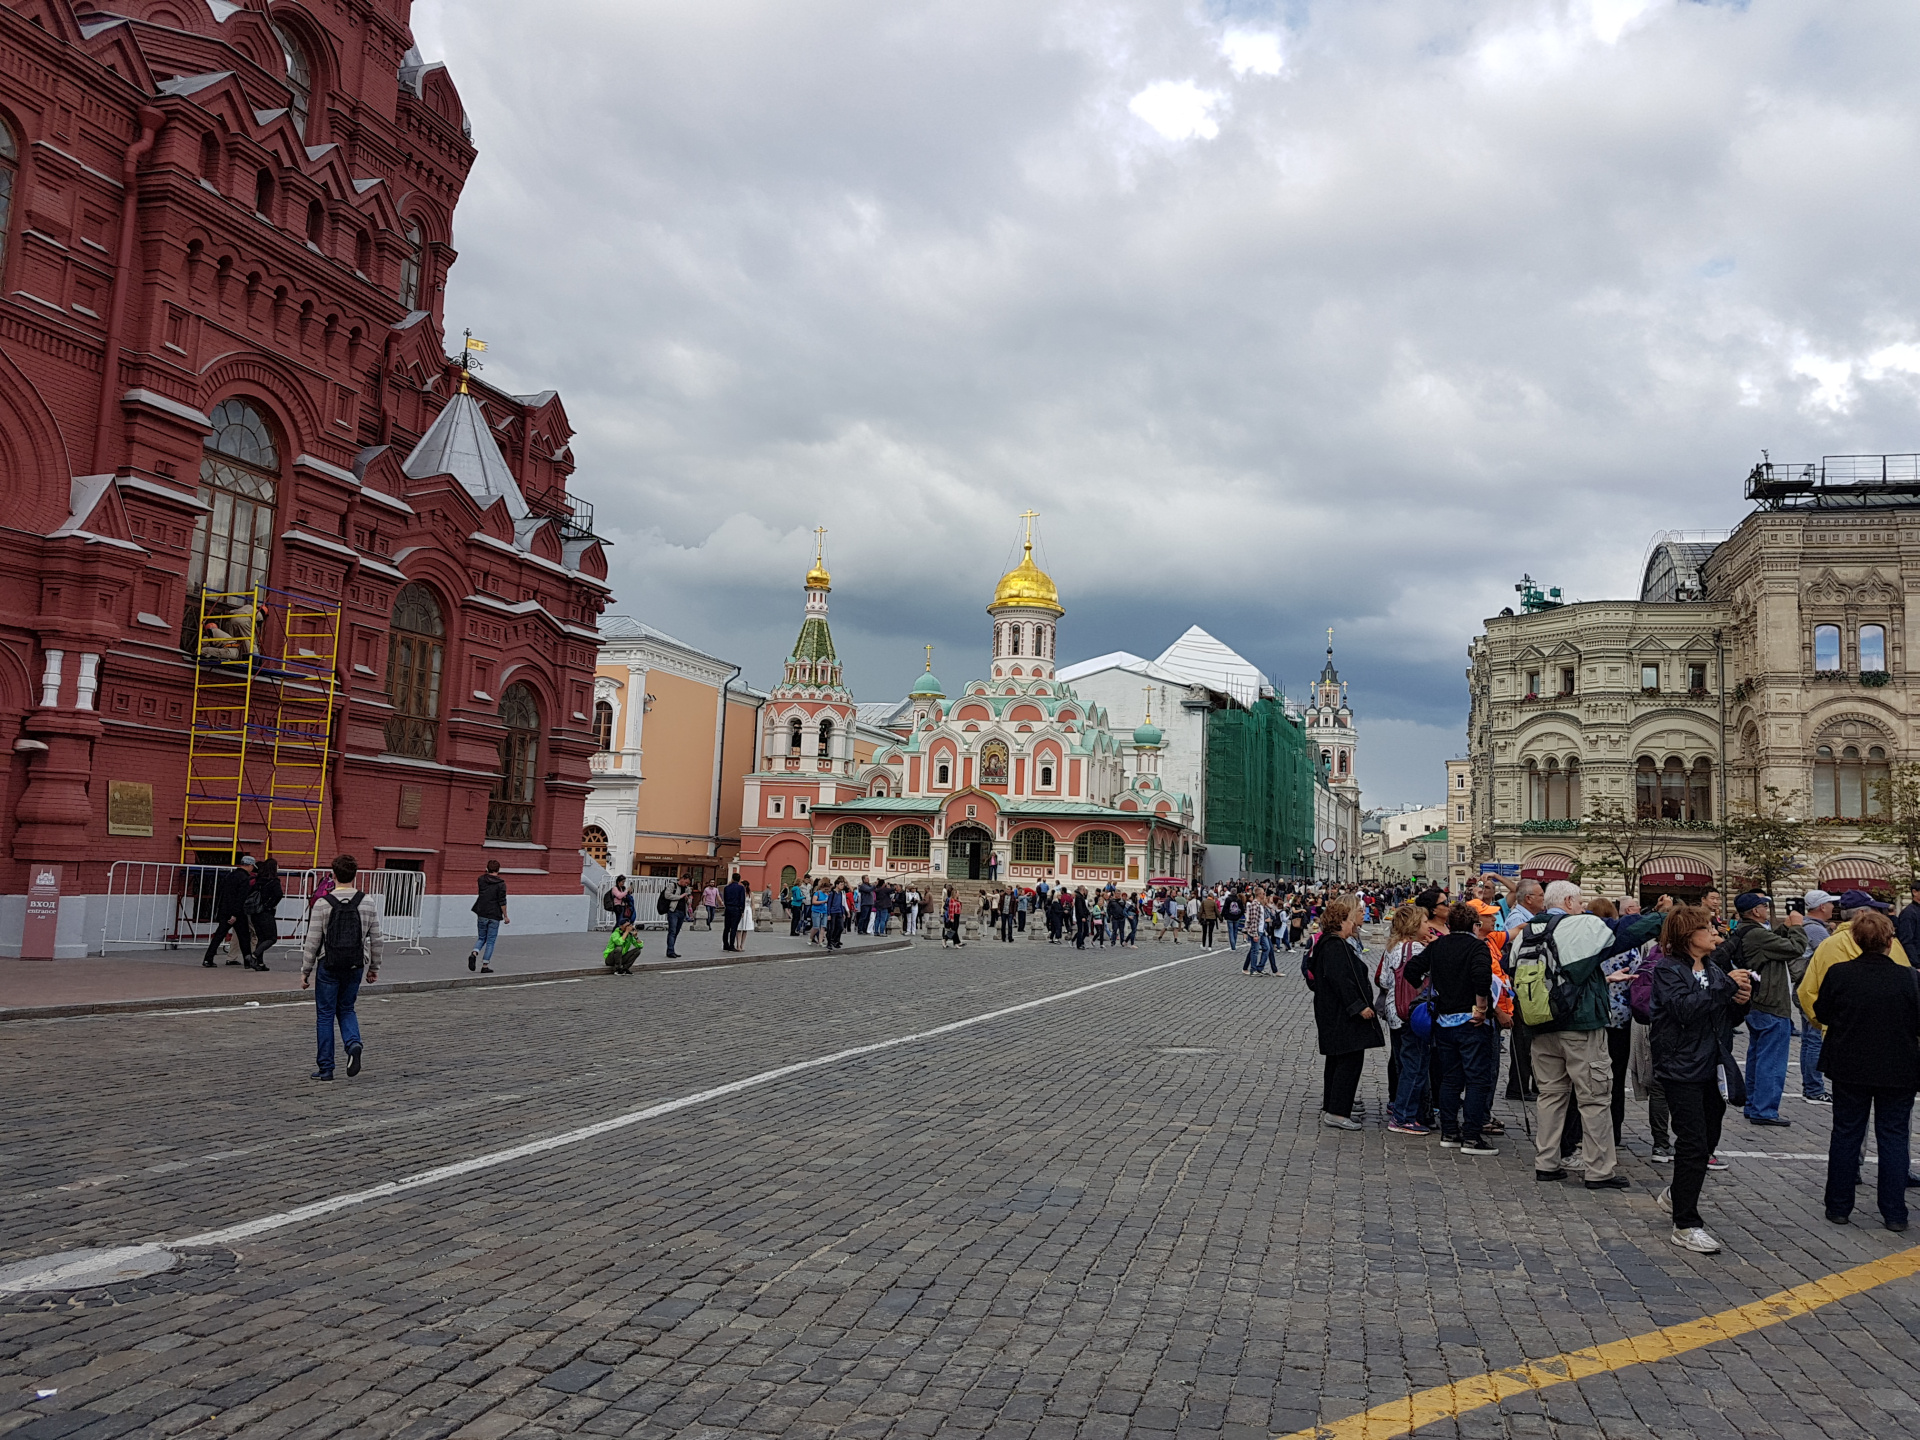 20170706-154205-Moscow-Kreml-Red_Square-SJ.jpg